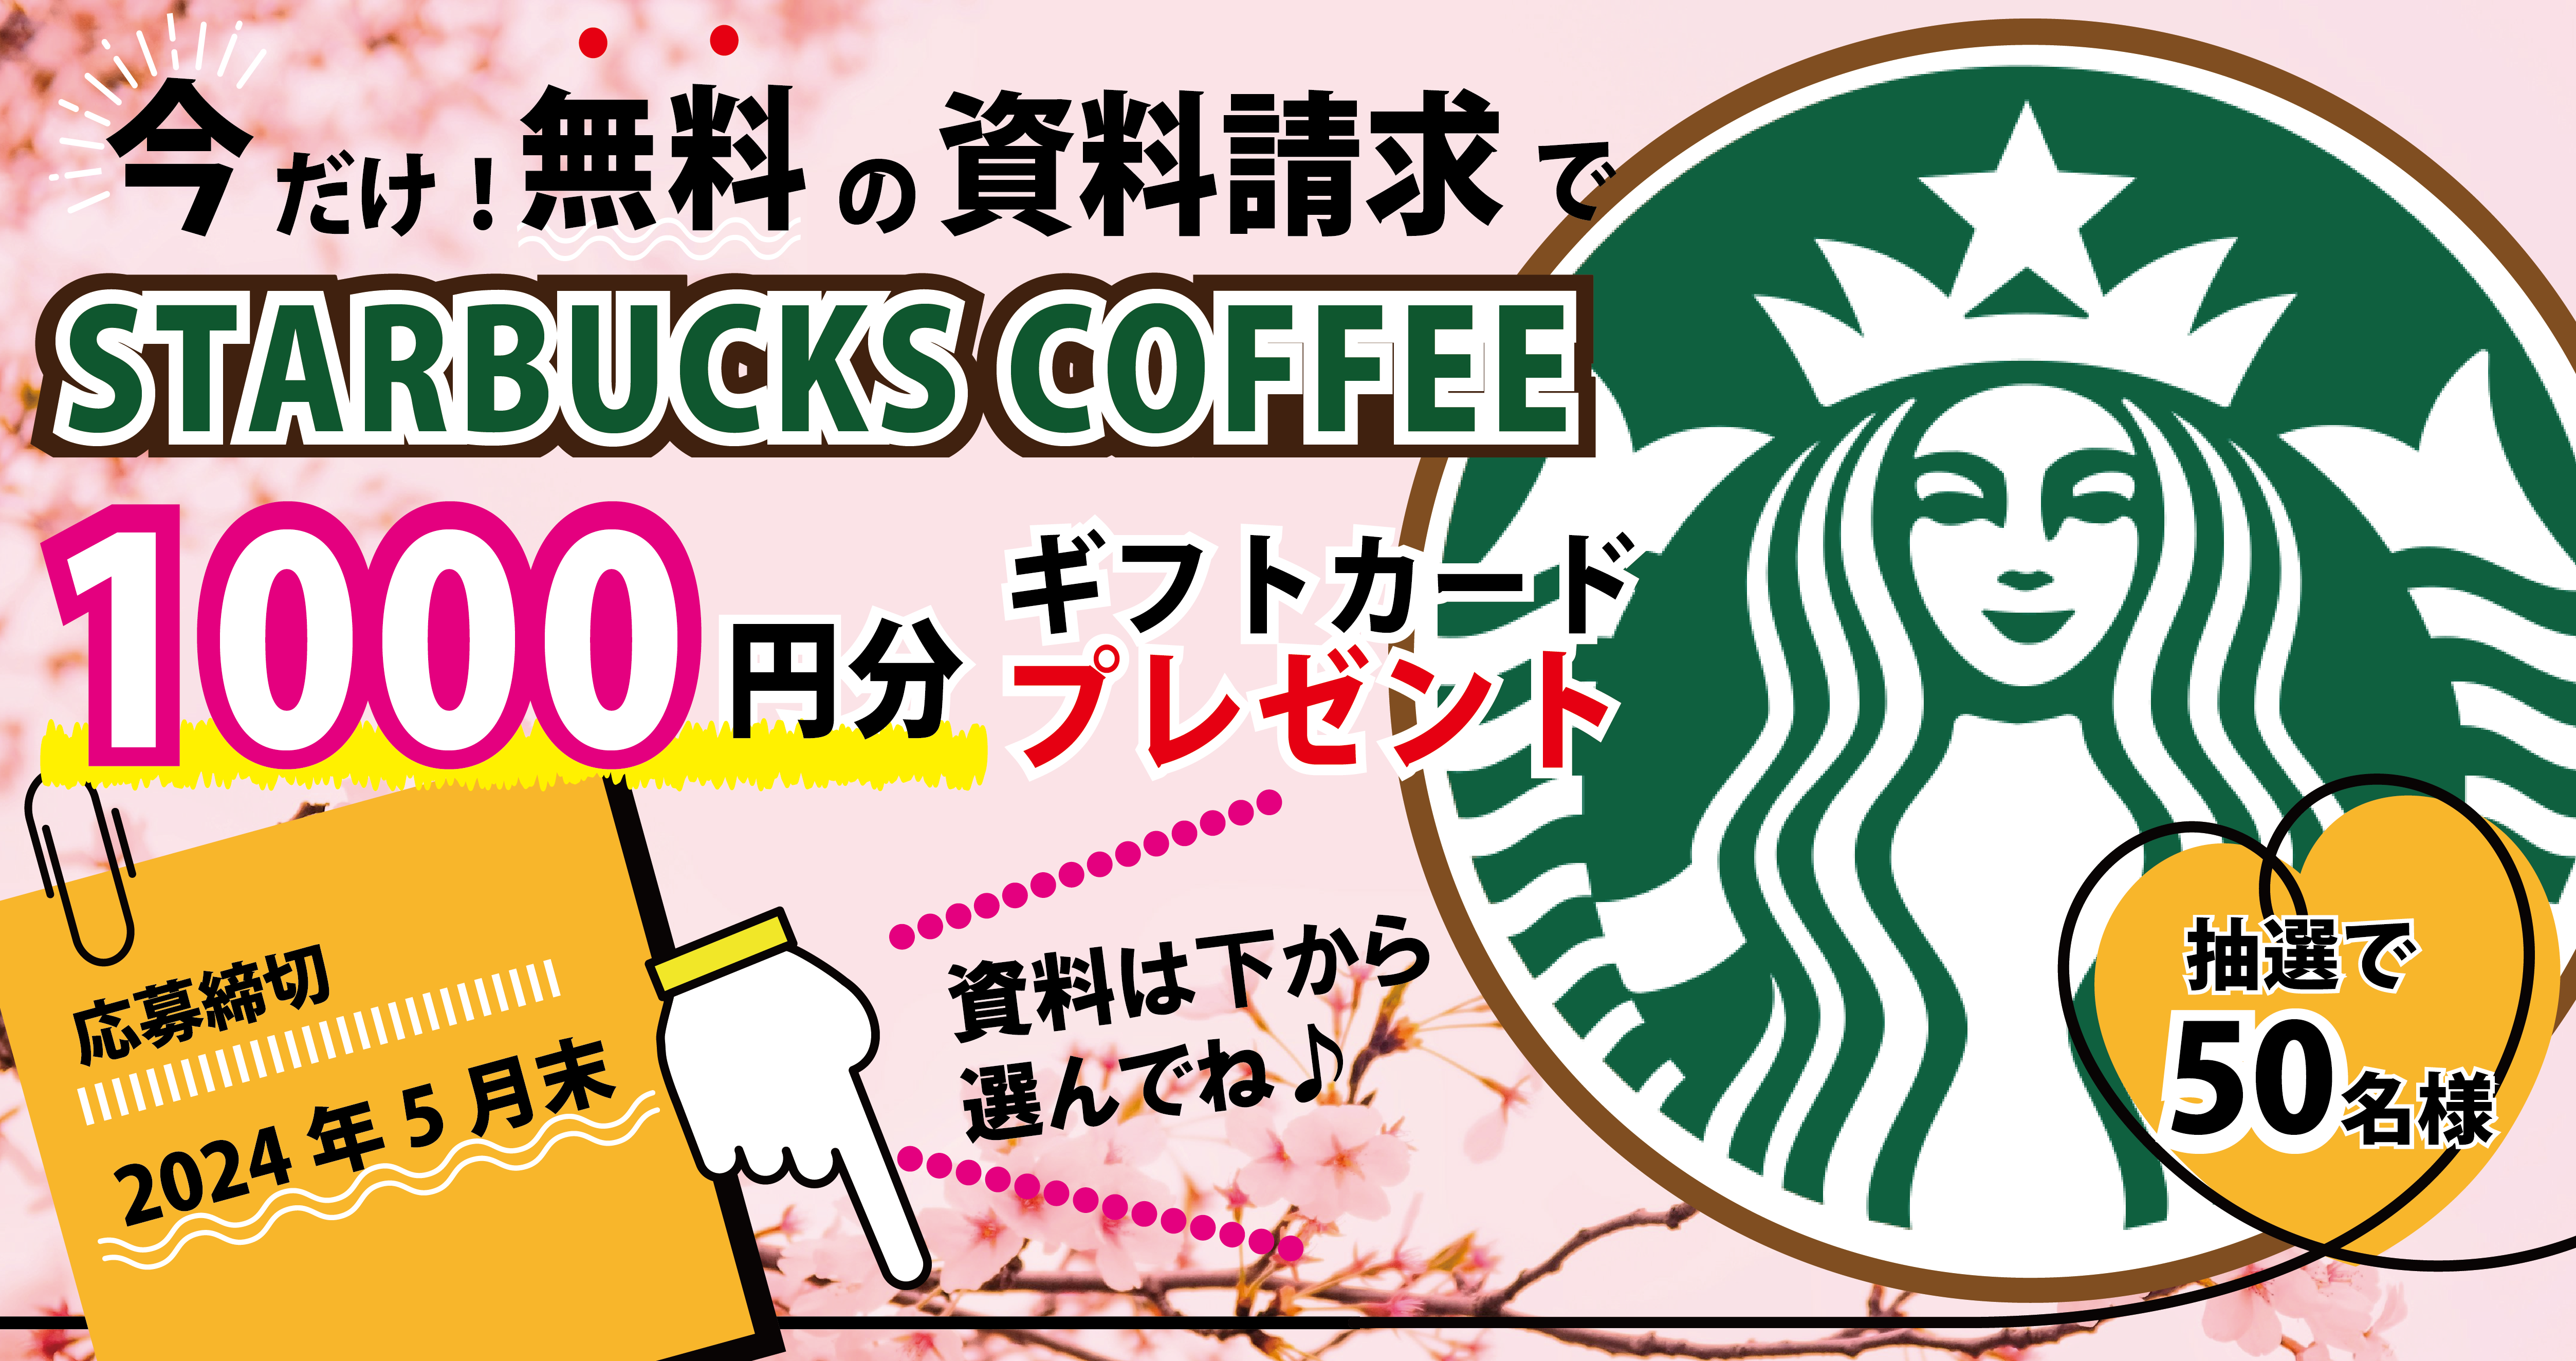 STARBUCKS COFFEE ギフトカード1000円分が当たる